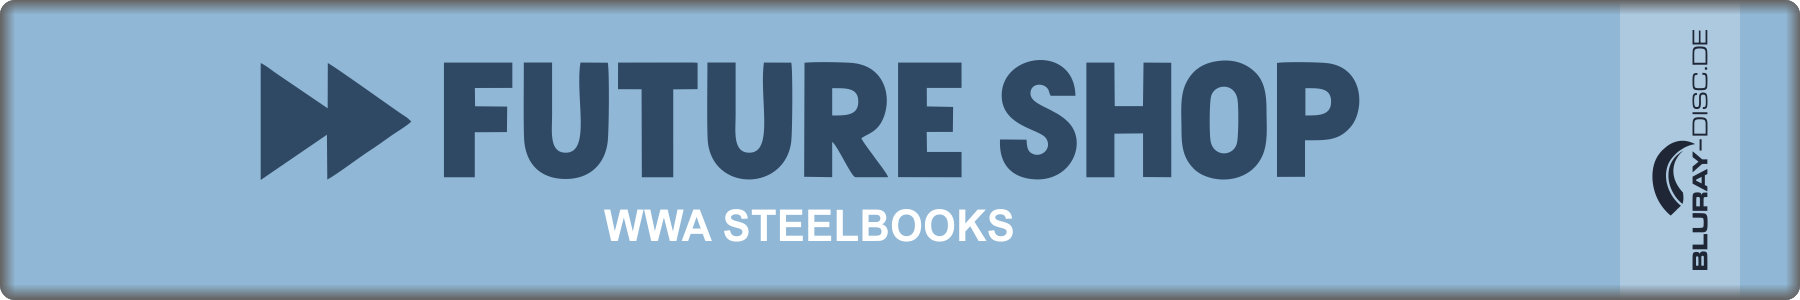 FutureShop_WWA_Steelbooks.png